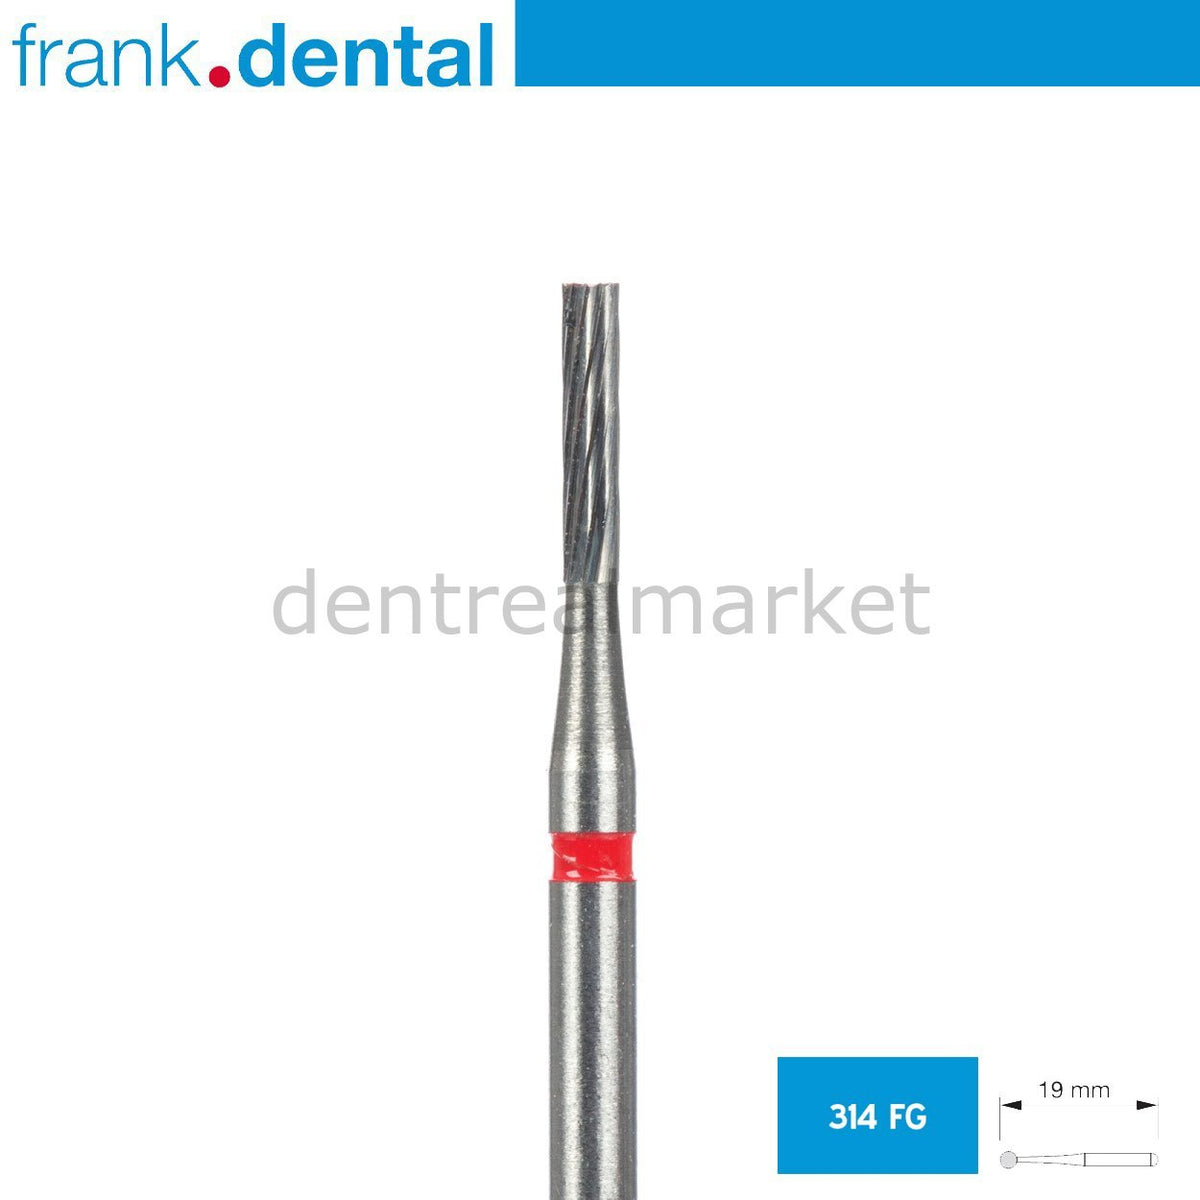 DentrealStore - Frank Dental C.275 Carbide Finishing Burs - 2 pcs